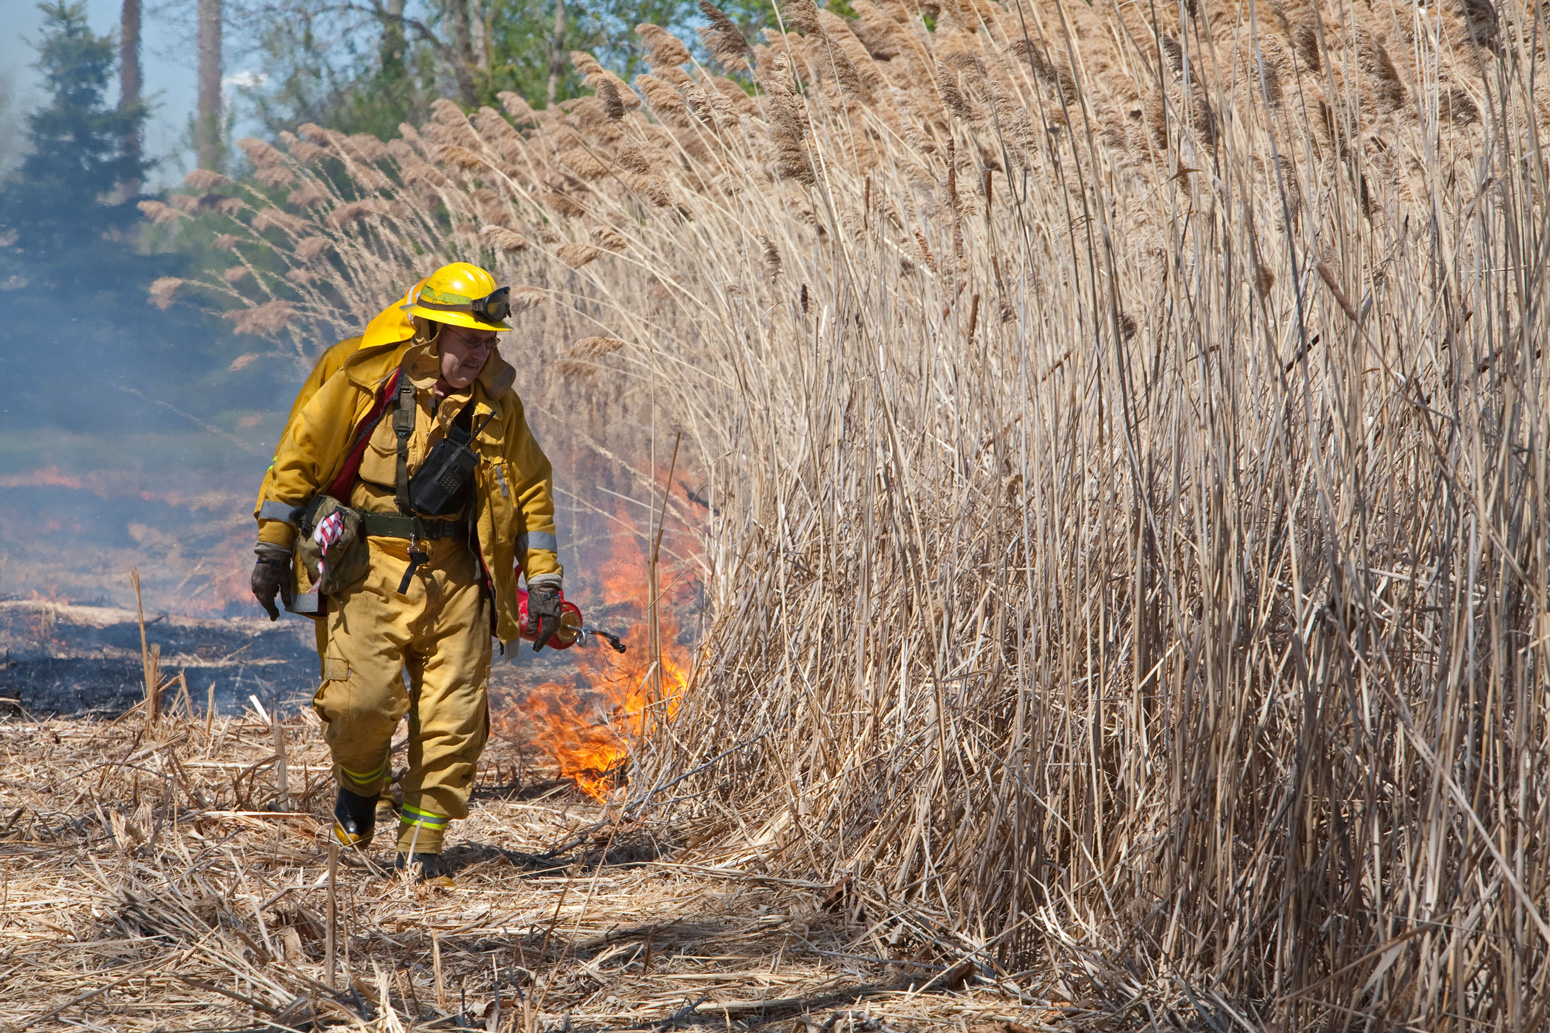 Prescribed Burn to Eliminate Invasive Giant Reed in Michigan Park.